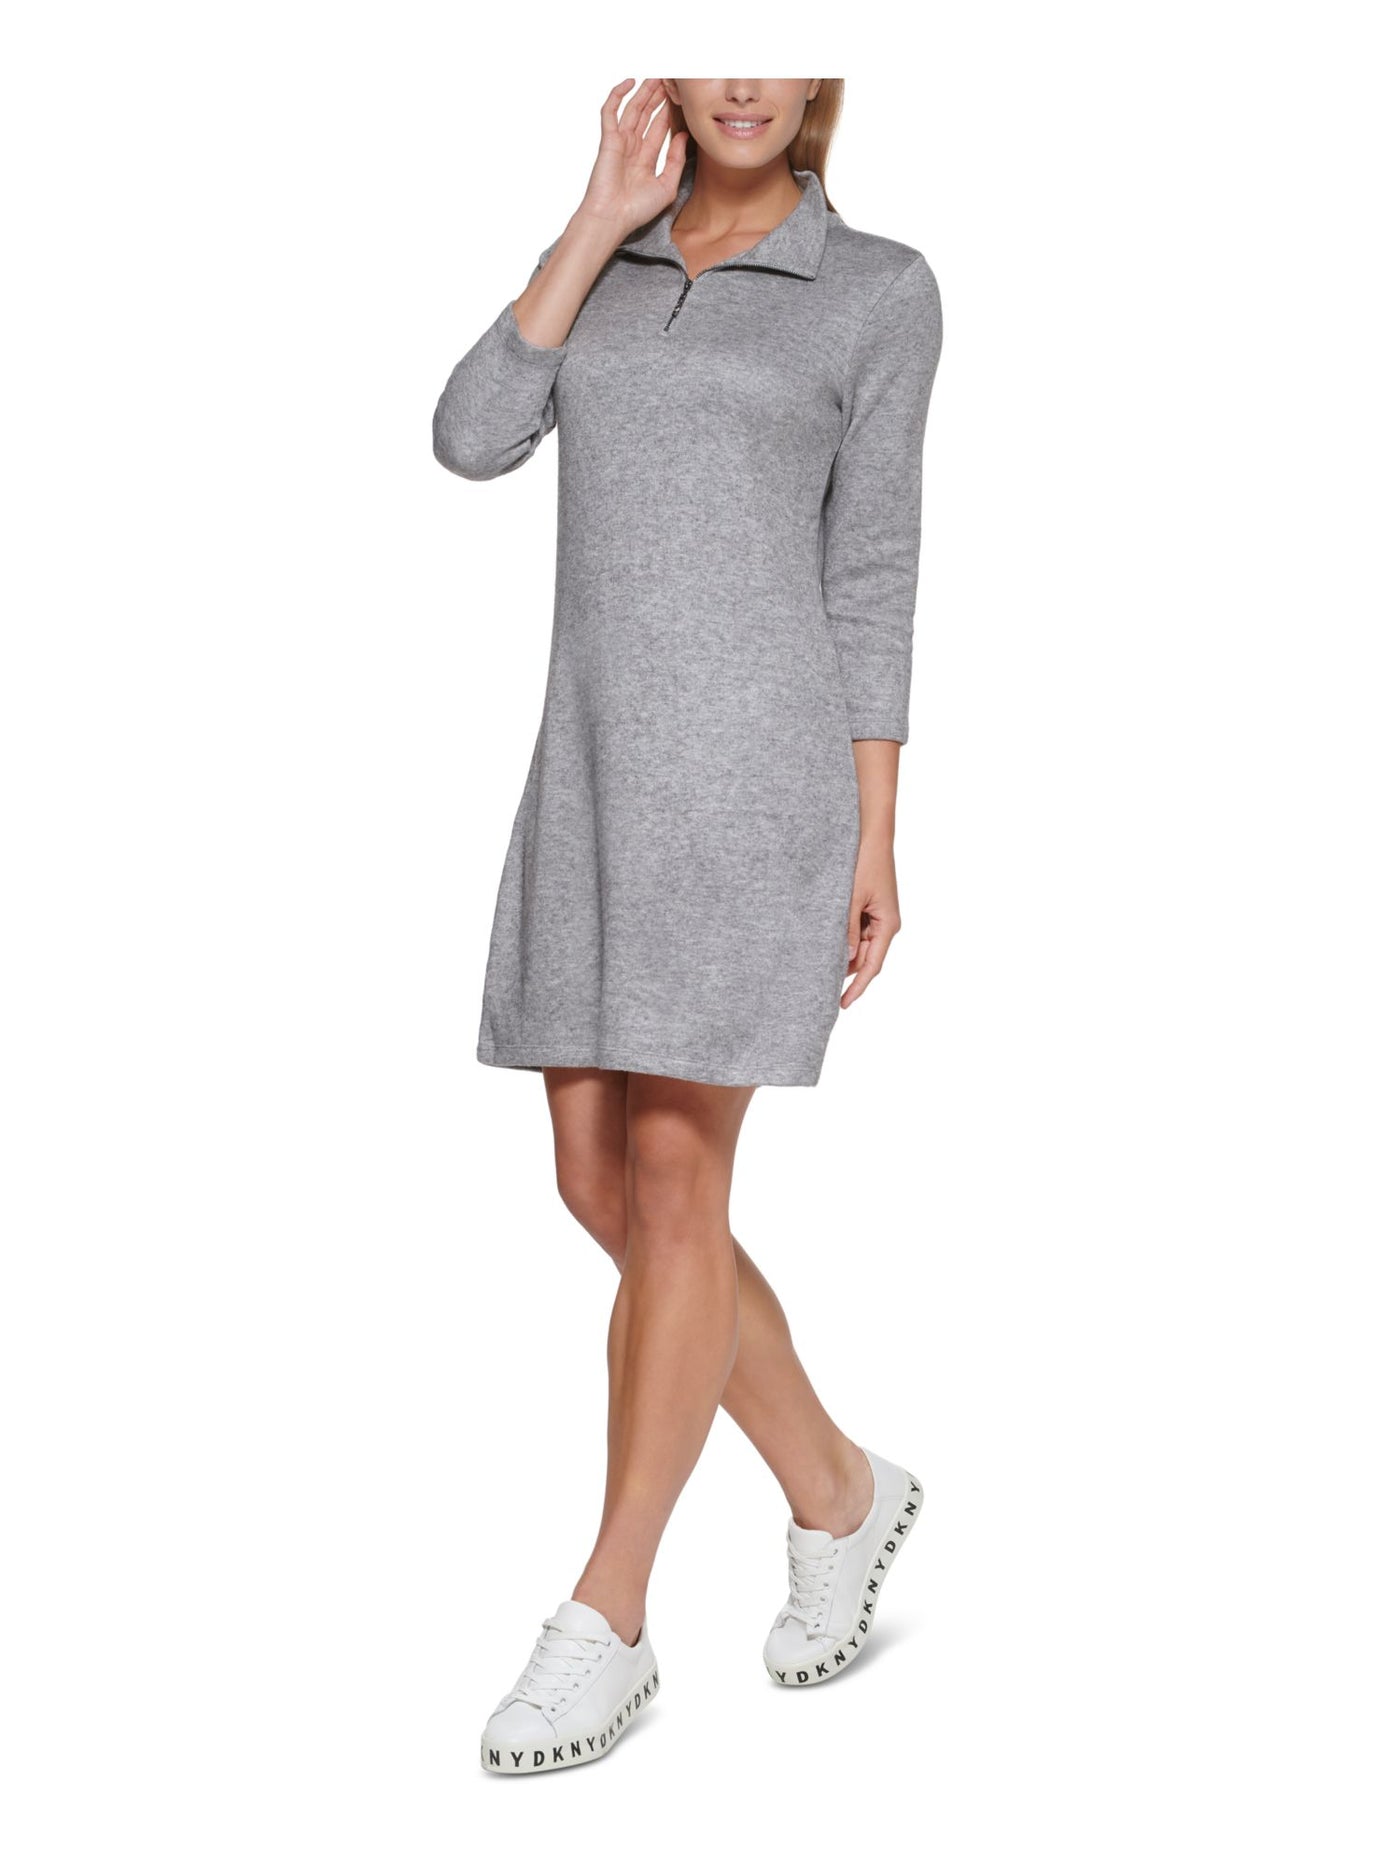 DKNY Womens Gray Knit Zippered Quarter Zip Heather Long Sleeve Mock Neck Above The Knee Sweater Dress S